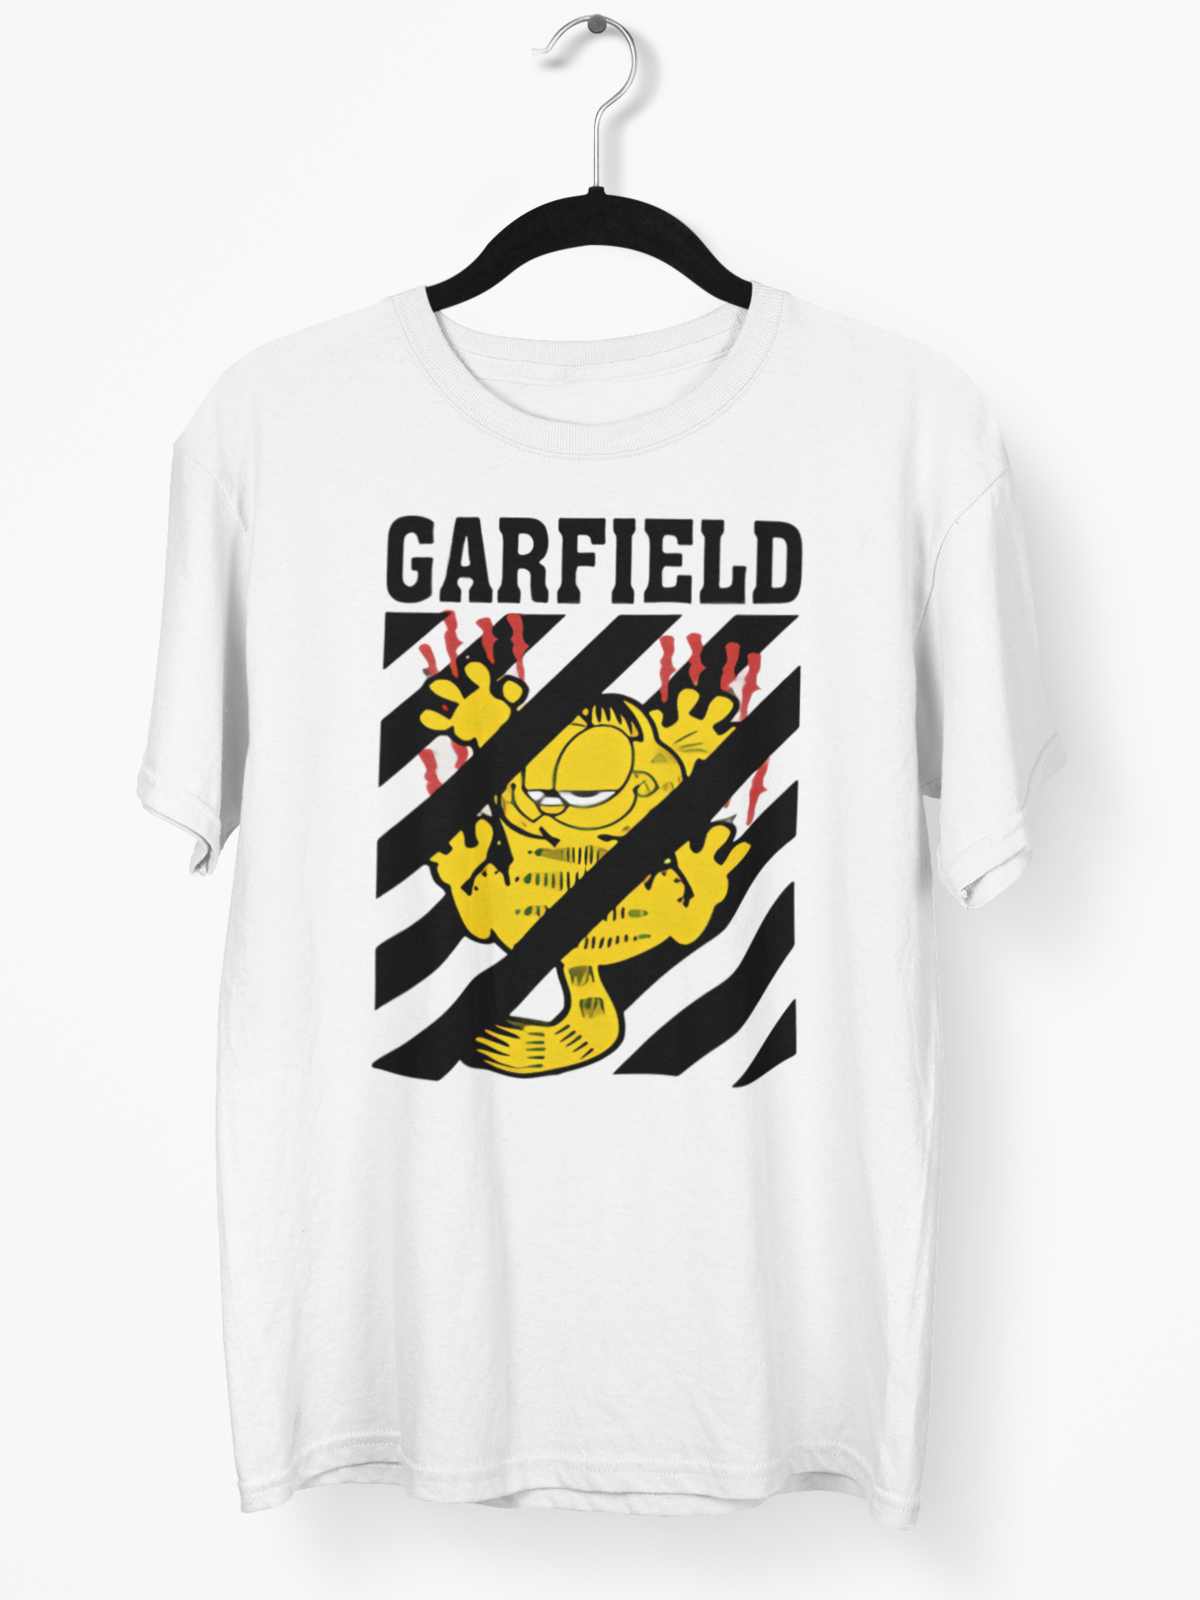 Smoothy: Garfield